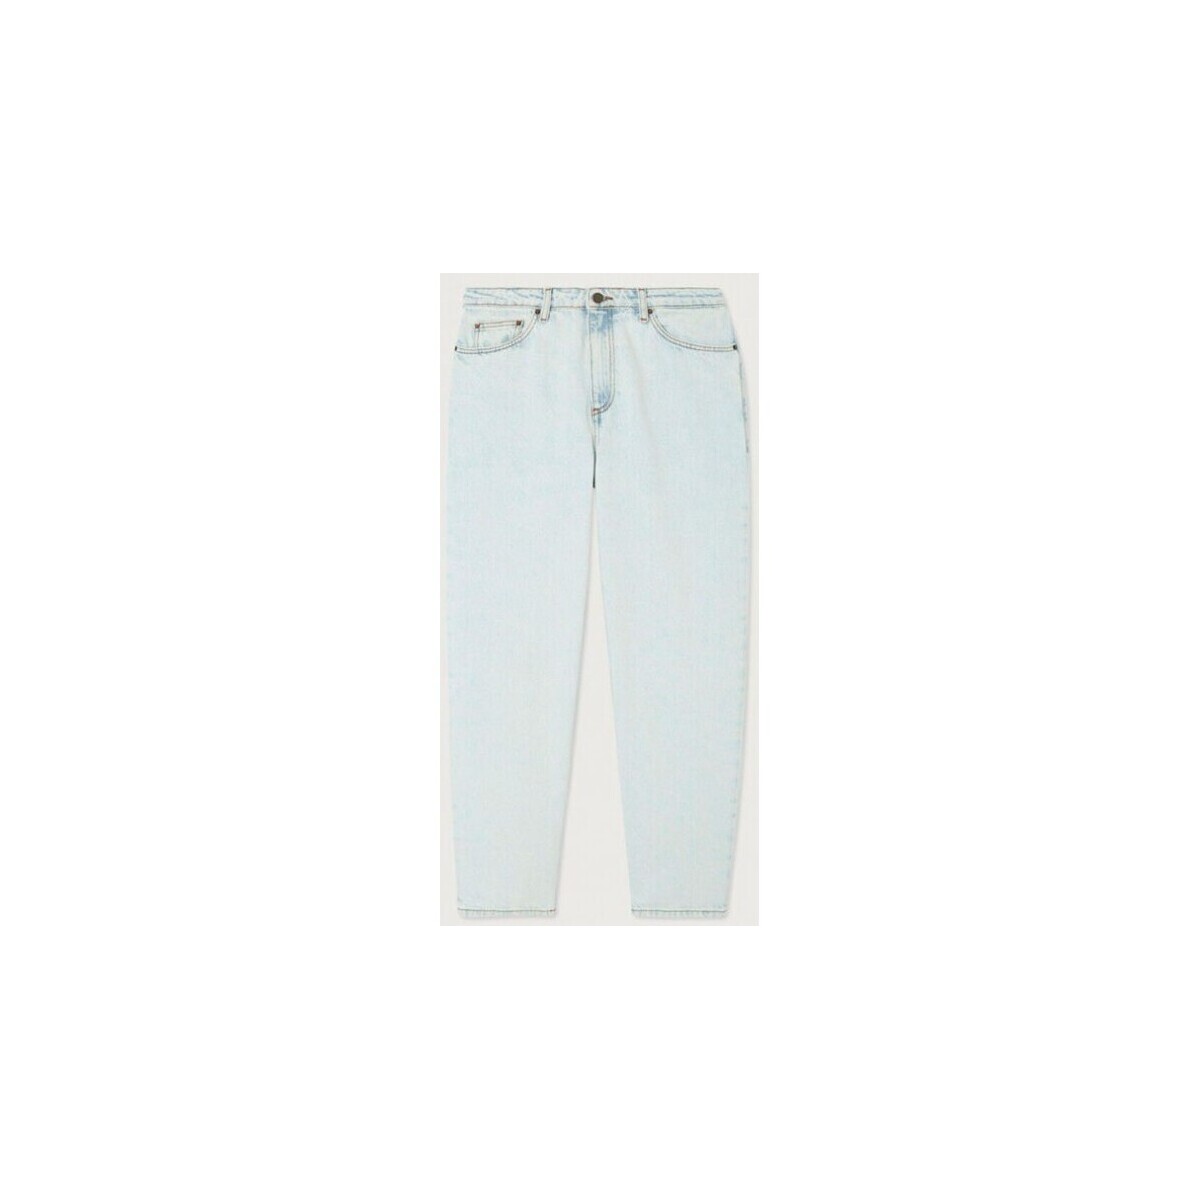 Vêtements Homme Children Of The Discordance Vintage Scarf patchwork shorts Joybird Straight Jeans Winter Multicolore